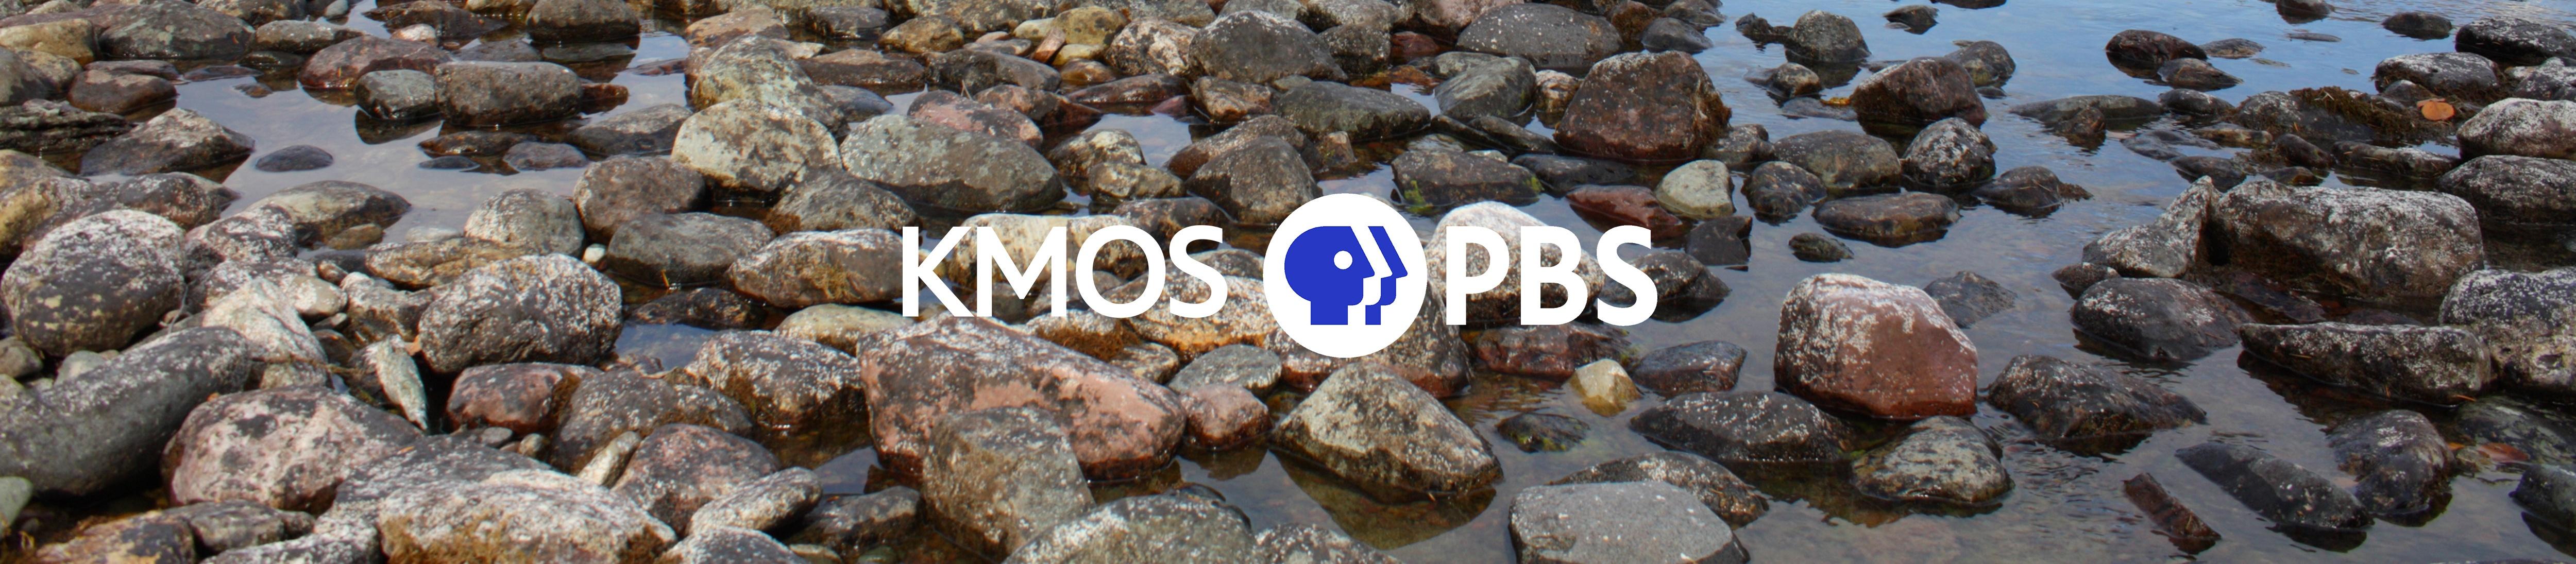 KMOS PBS logo on image of rocky lakeshore